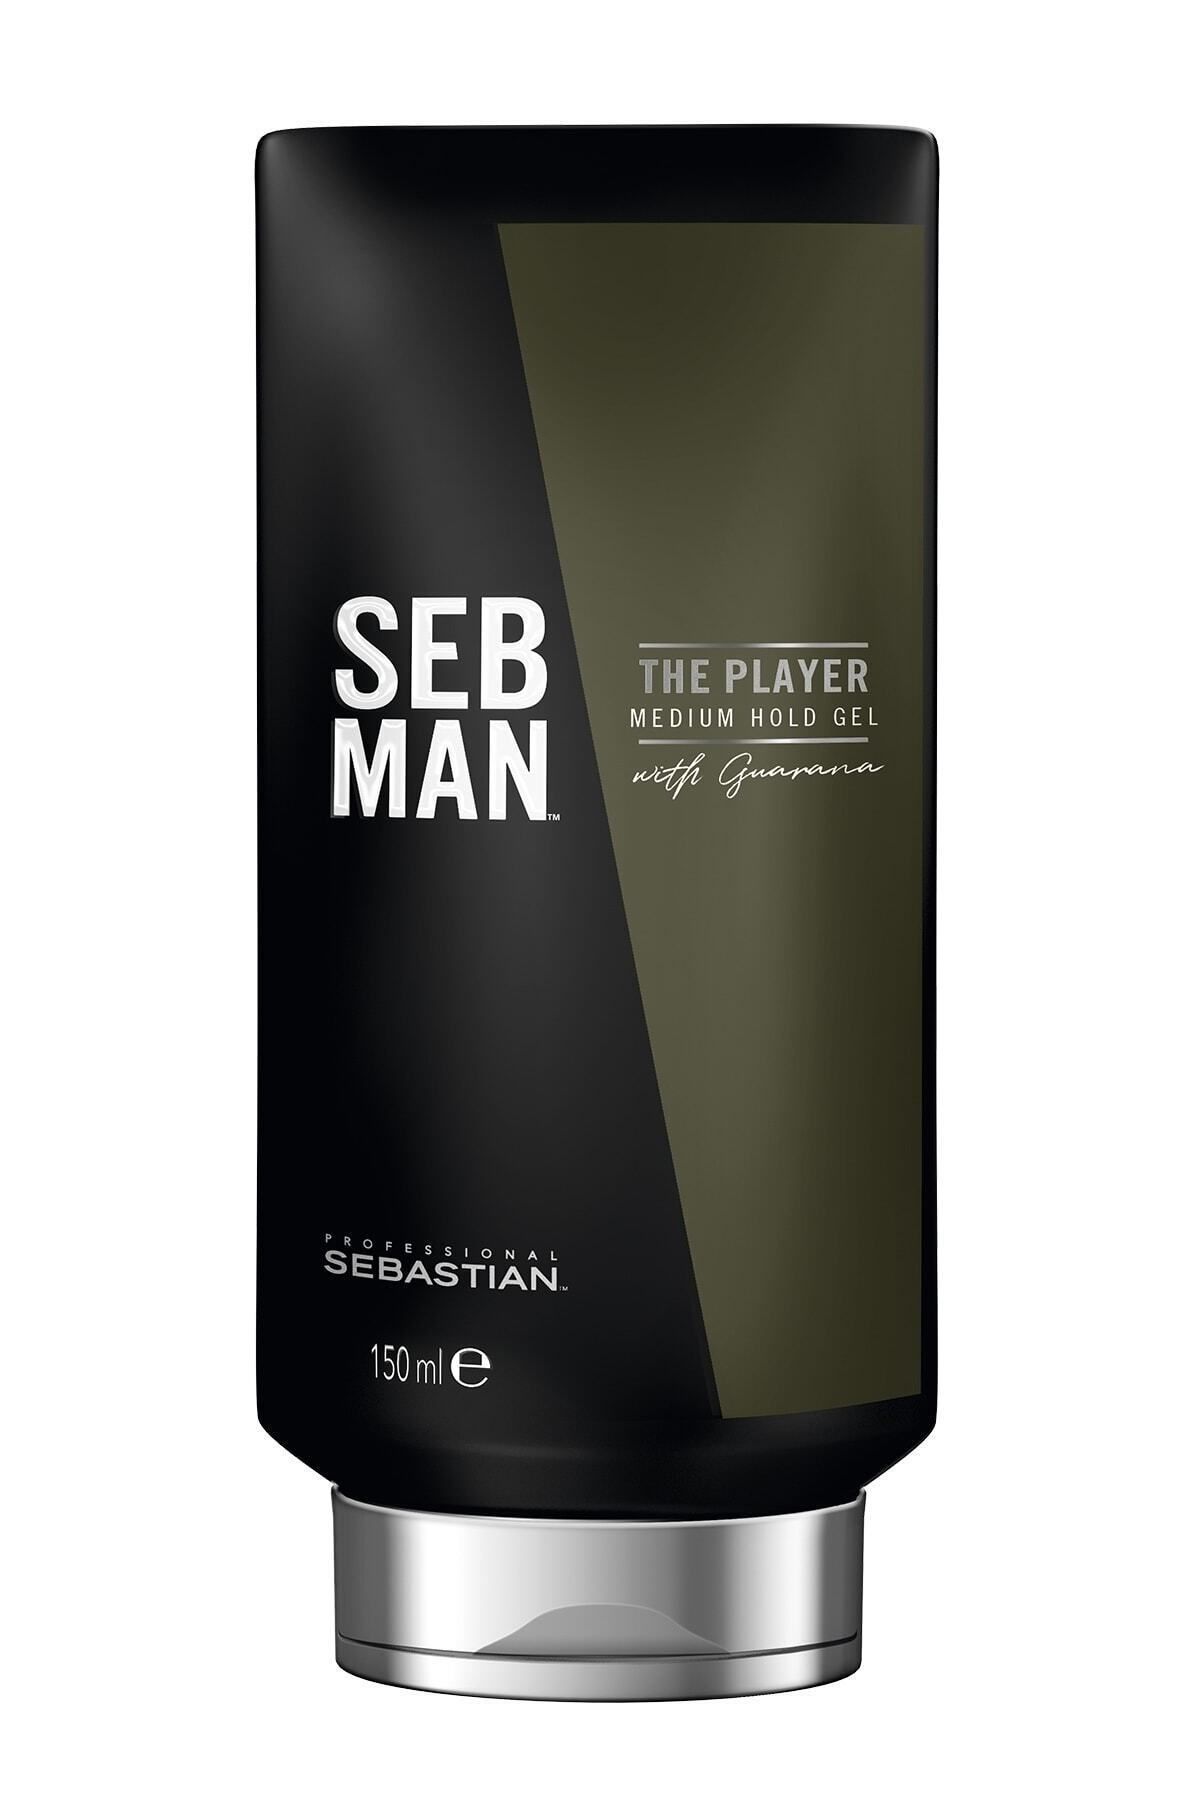 Sebastian Seb Man The Player Şekillendirici Jel 150 ml Keymankk